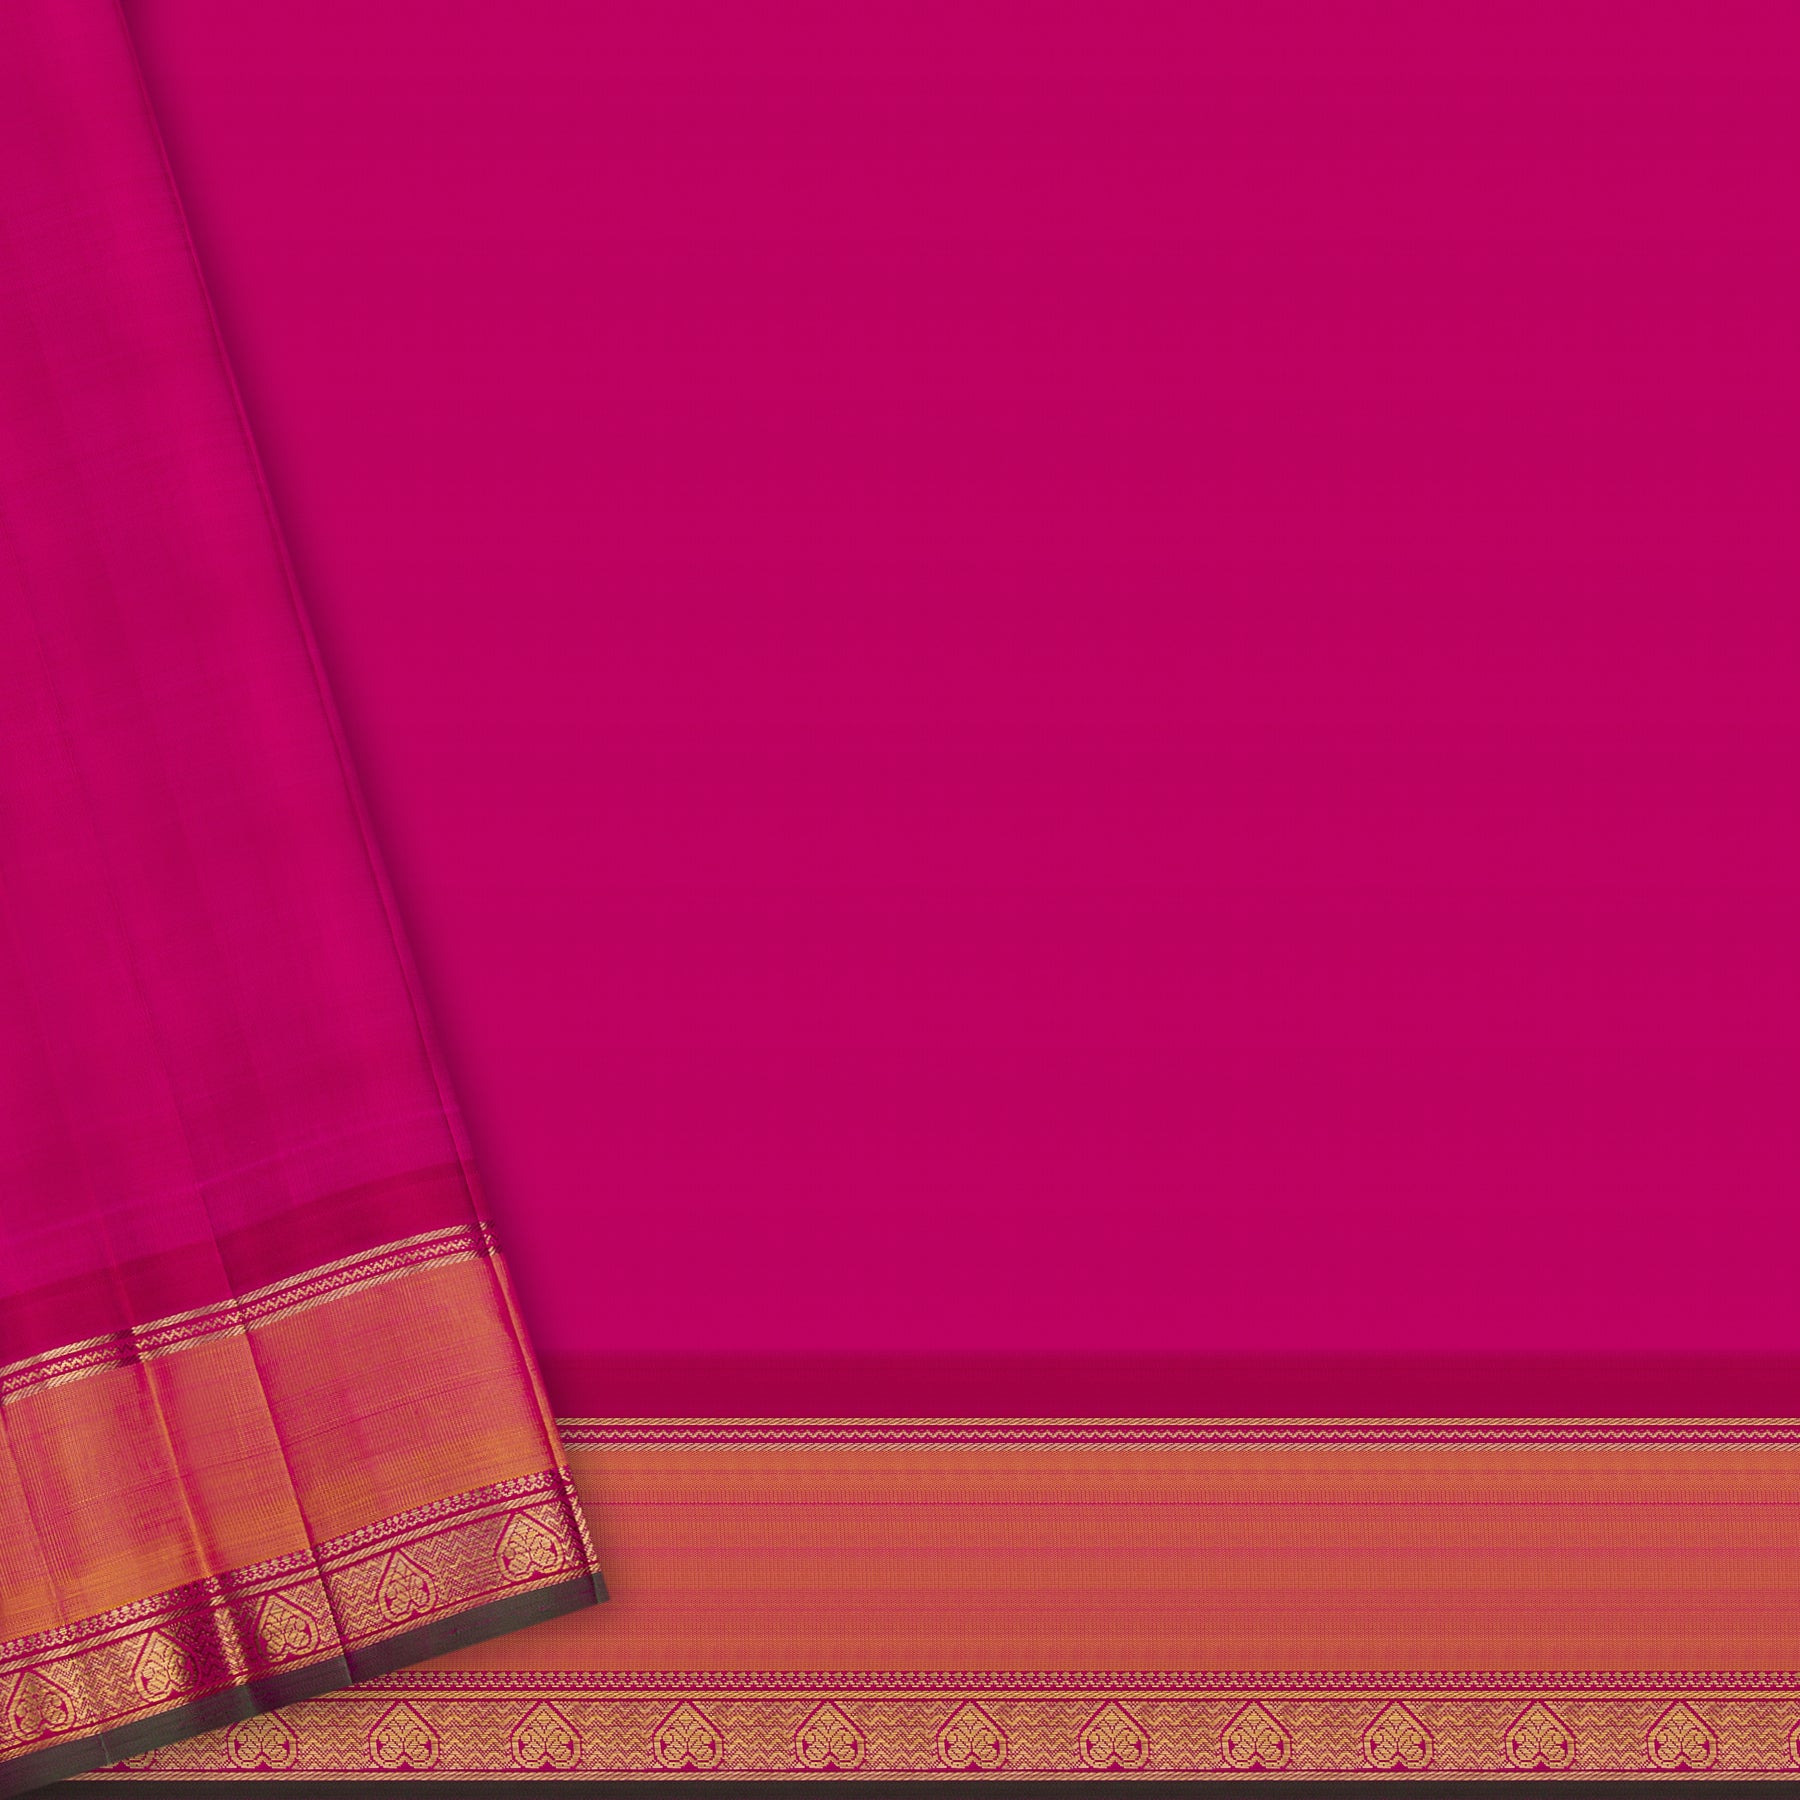 Kanakavalli Kanjivaram Silk Sari 23-595-HS001-11434 - Blouse View